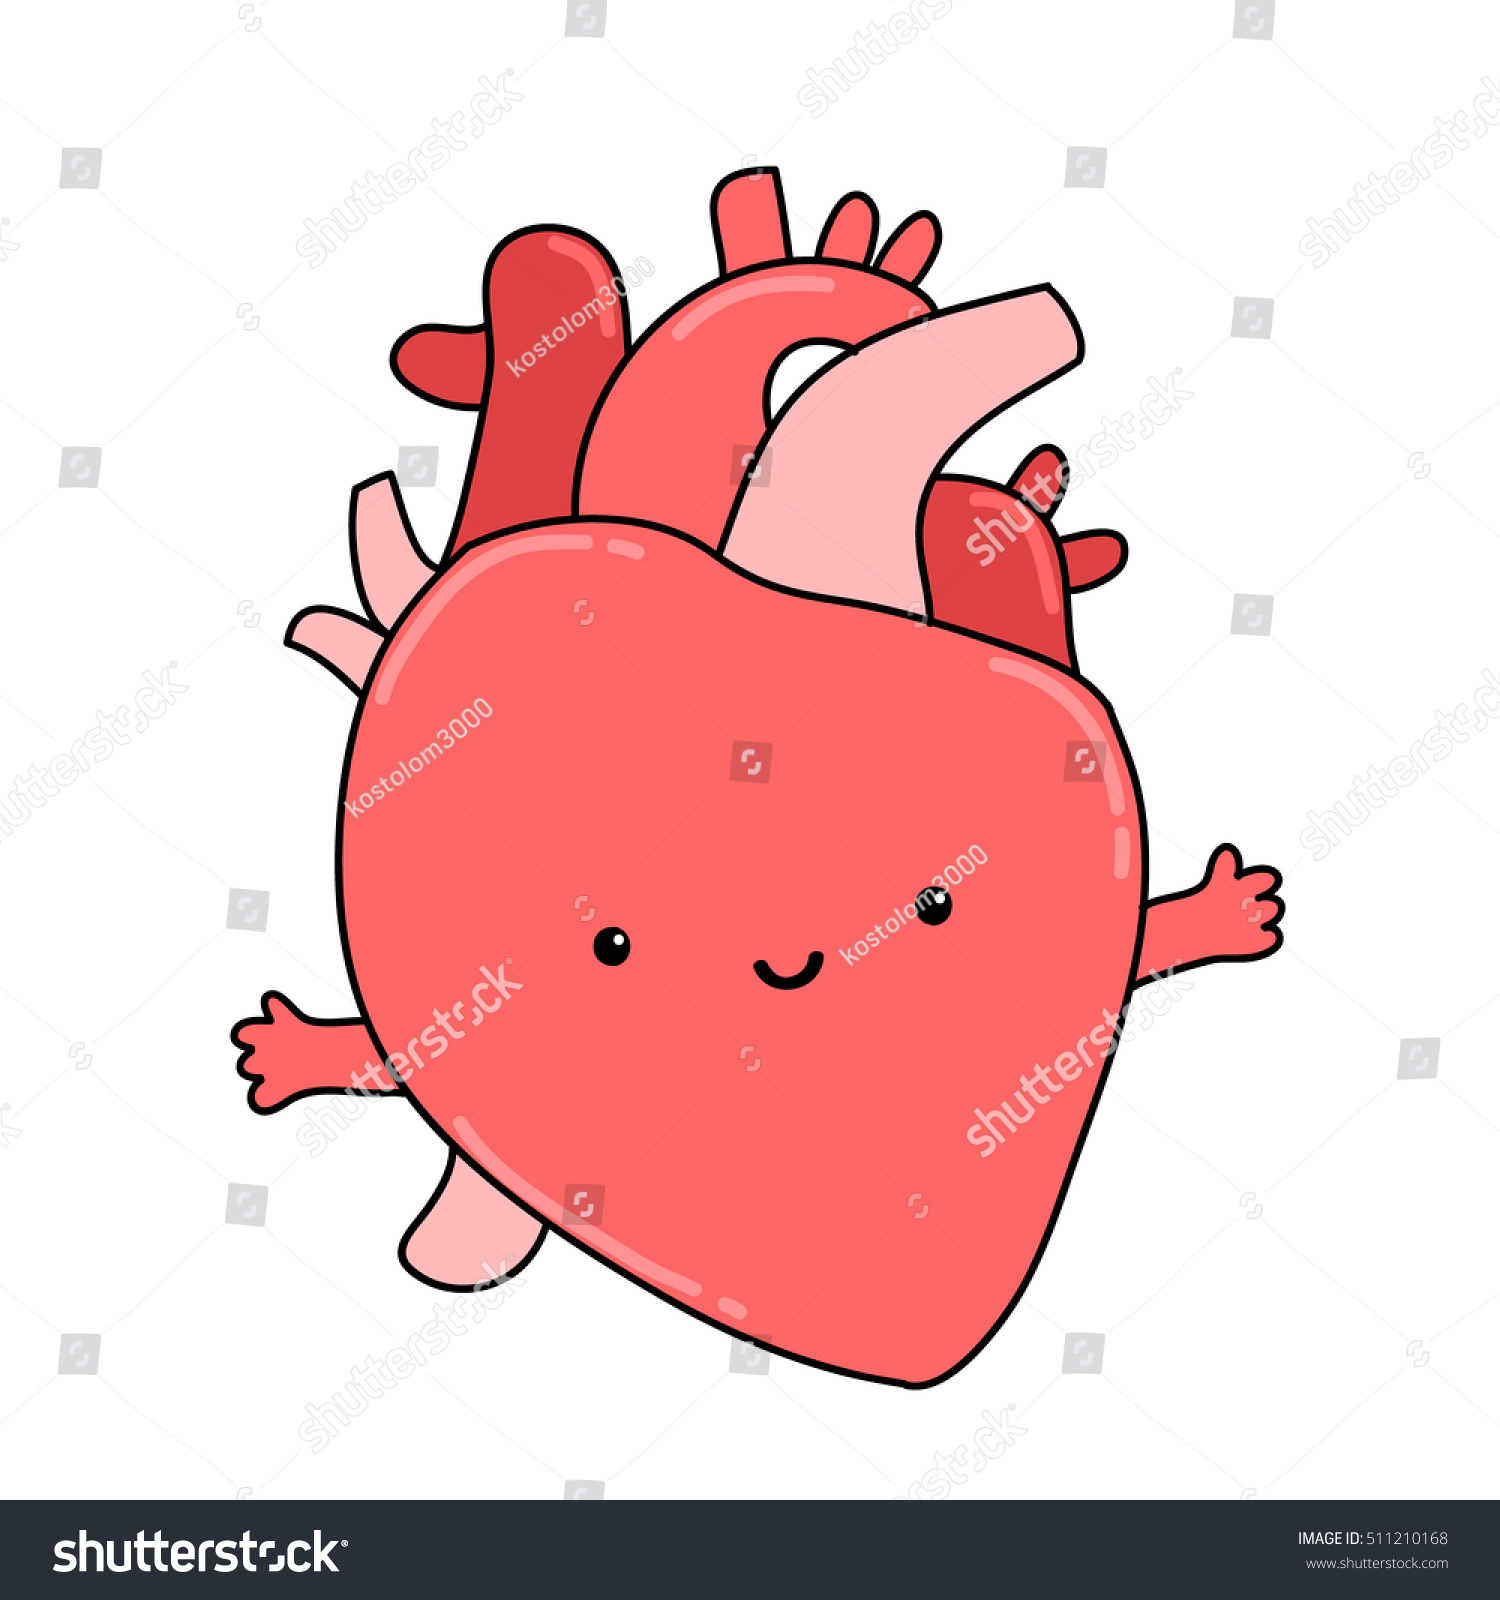 Cute Anatomical Cartoon Human Heart Organ Stock Vector (Royalty Free